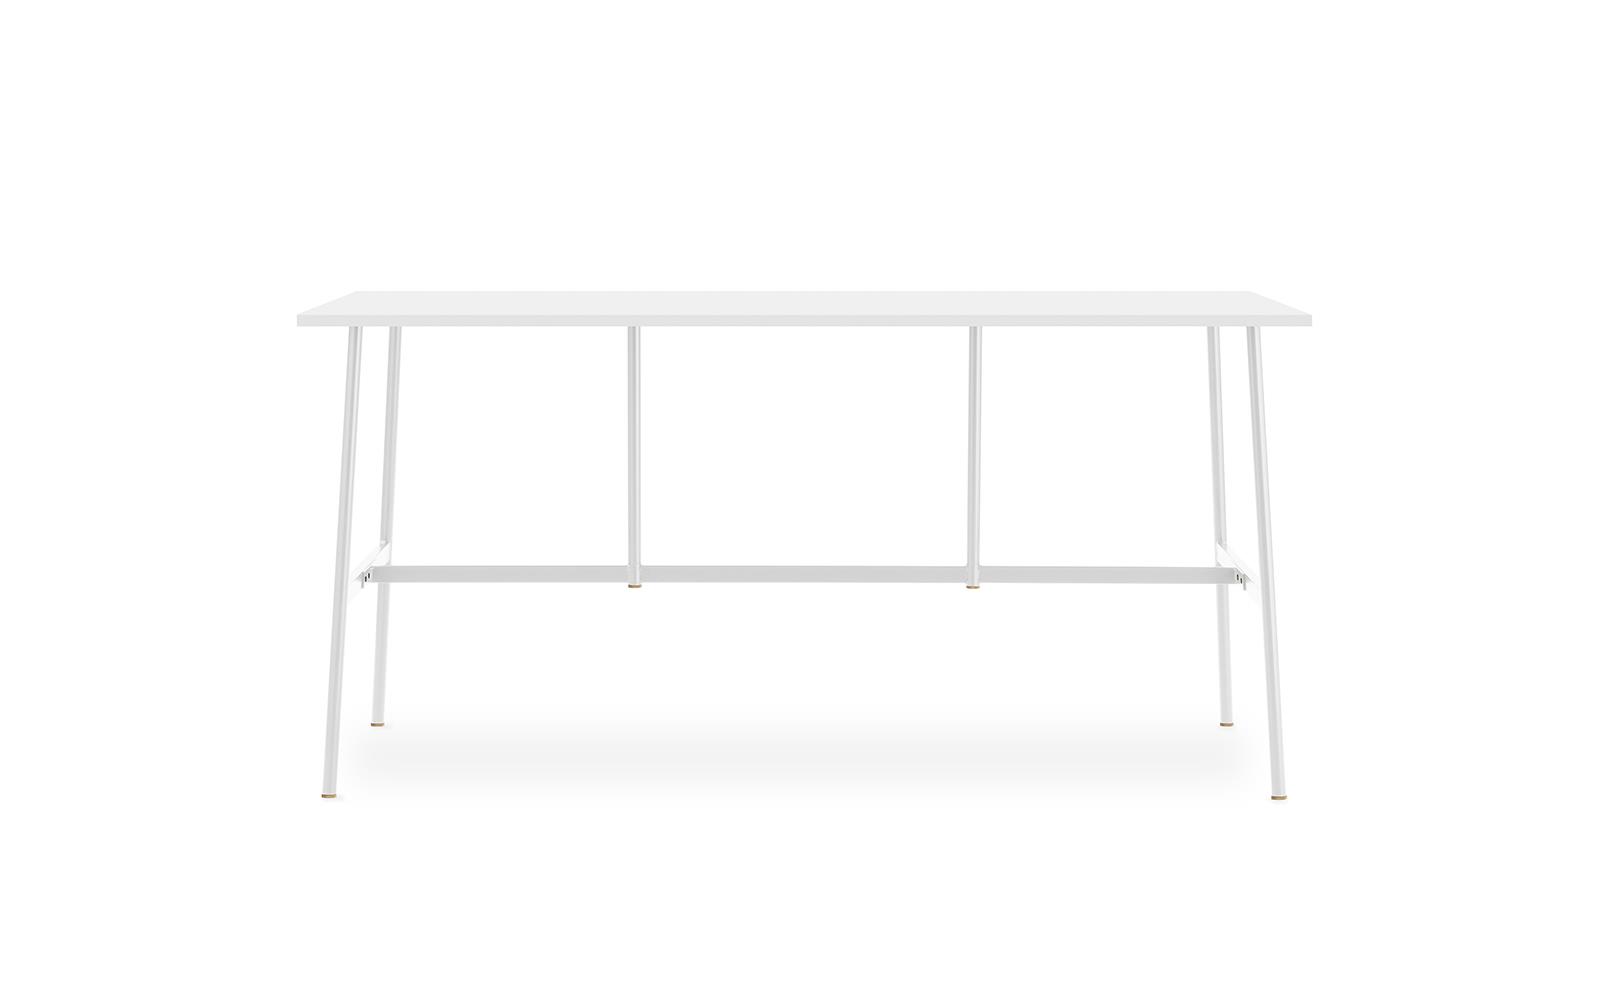 Union Bar Table 190 x 90 cm x H955 cm2